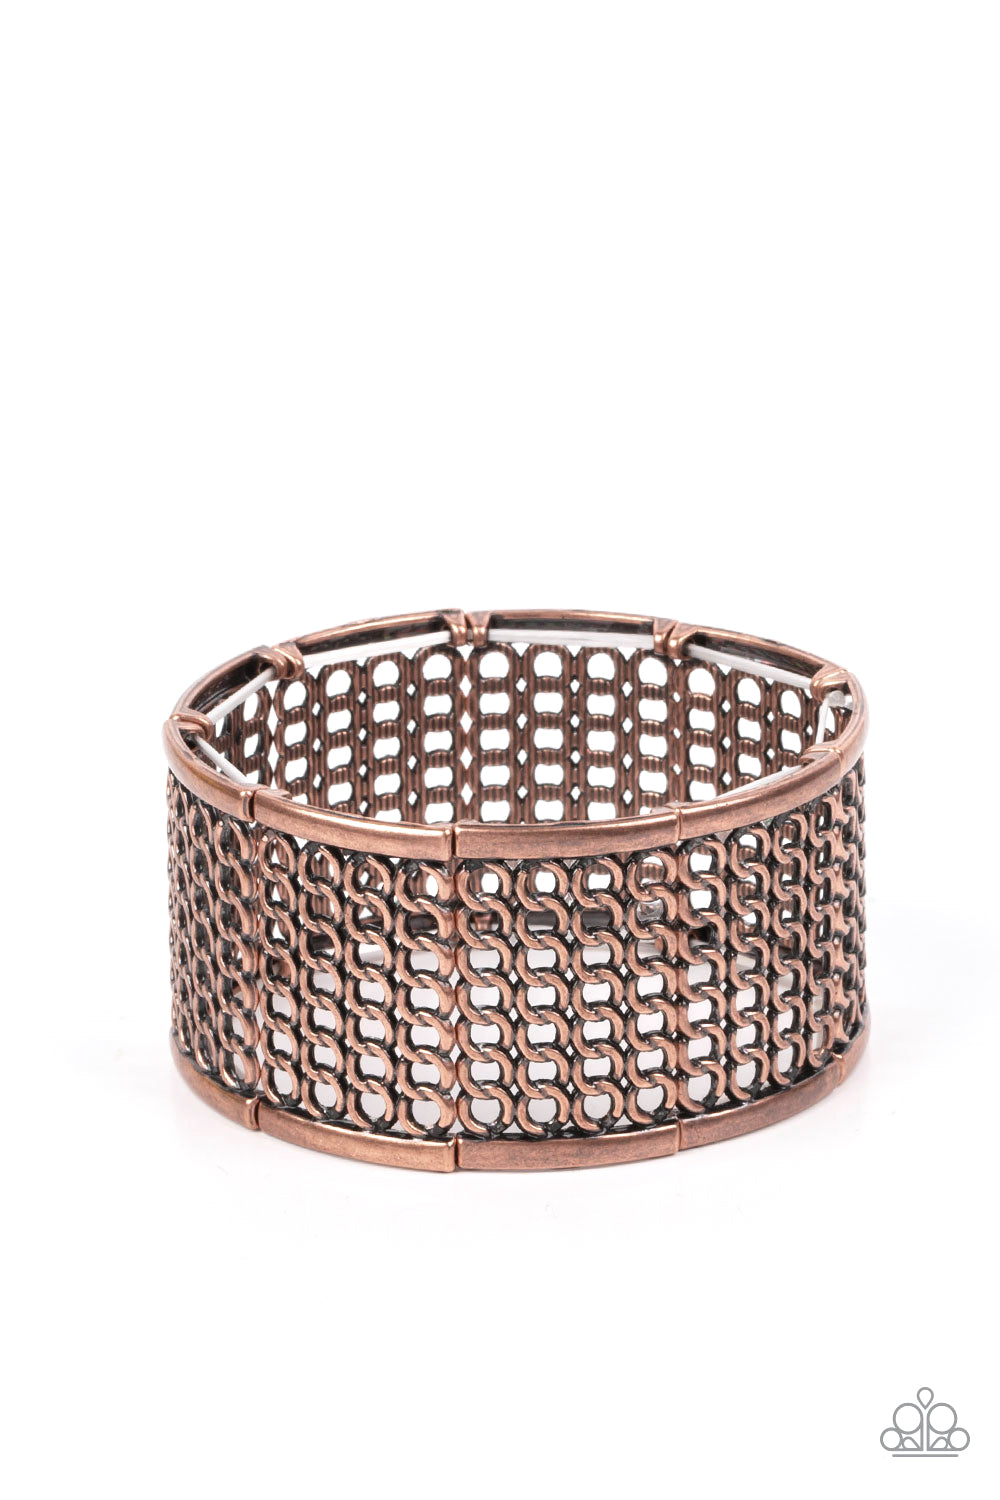 Camelot Couture - Copper Mesh Link Stretchy Bracelet